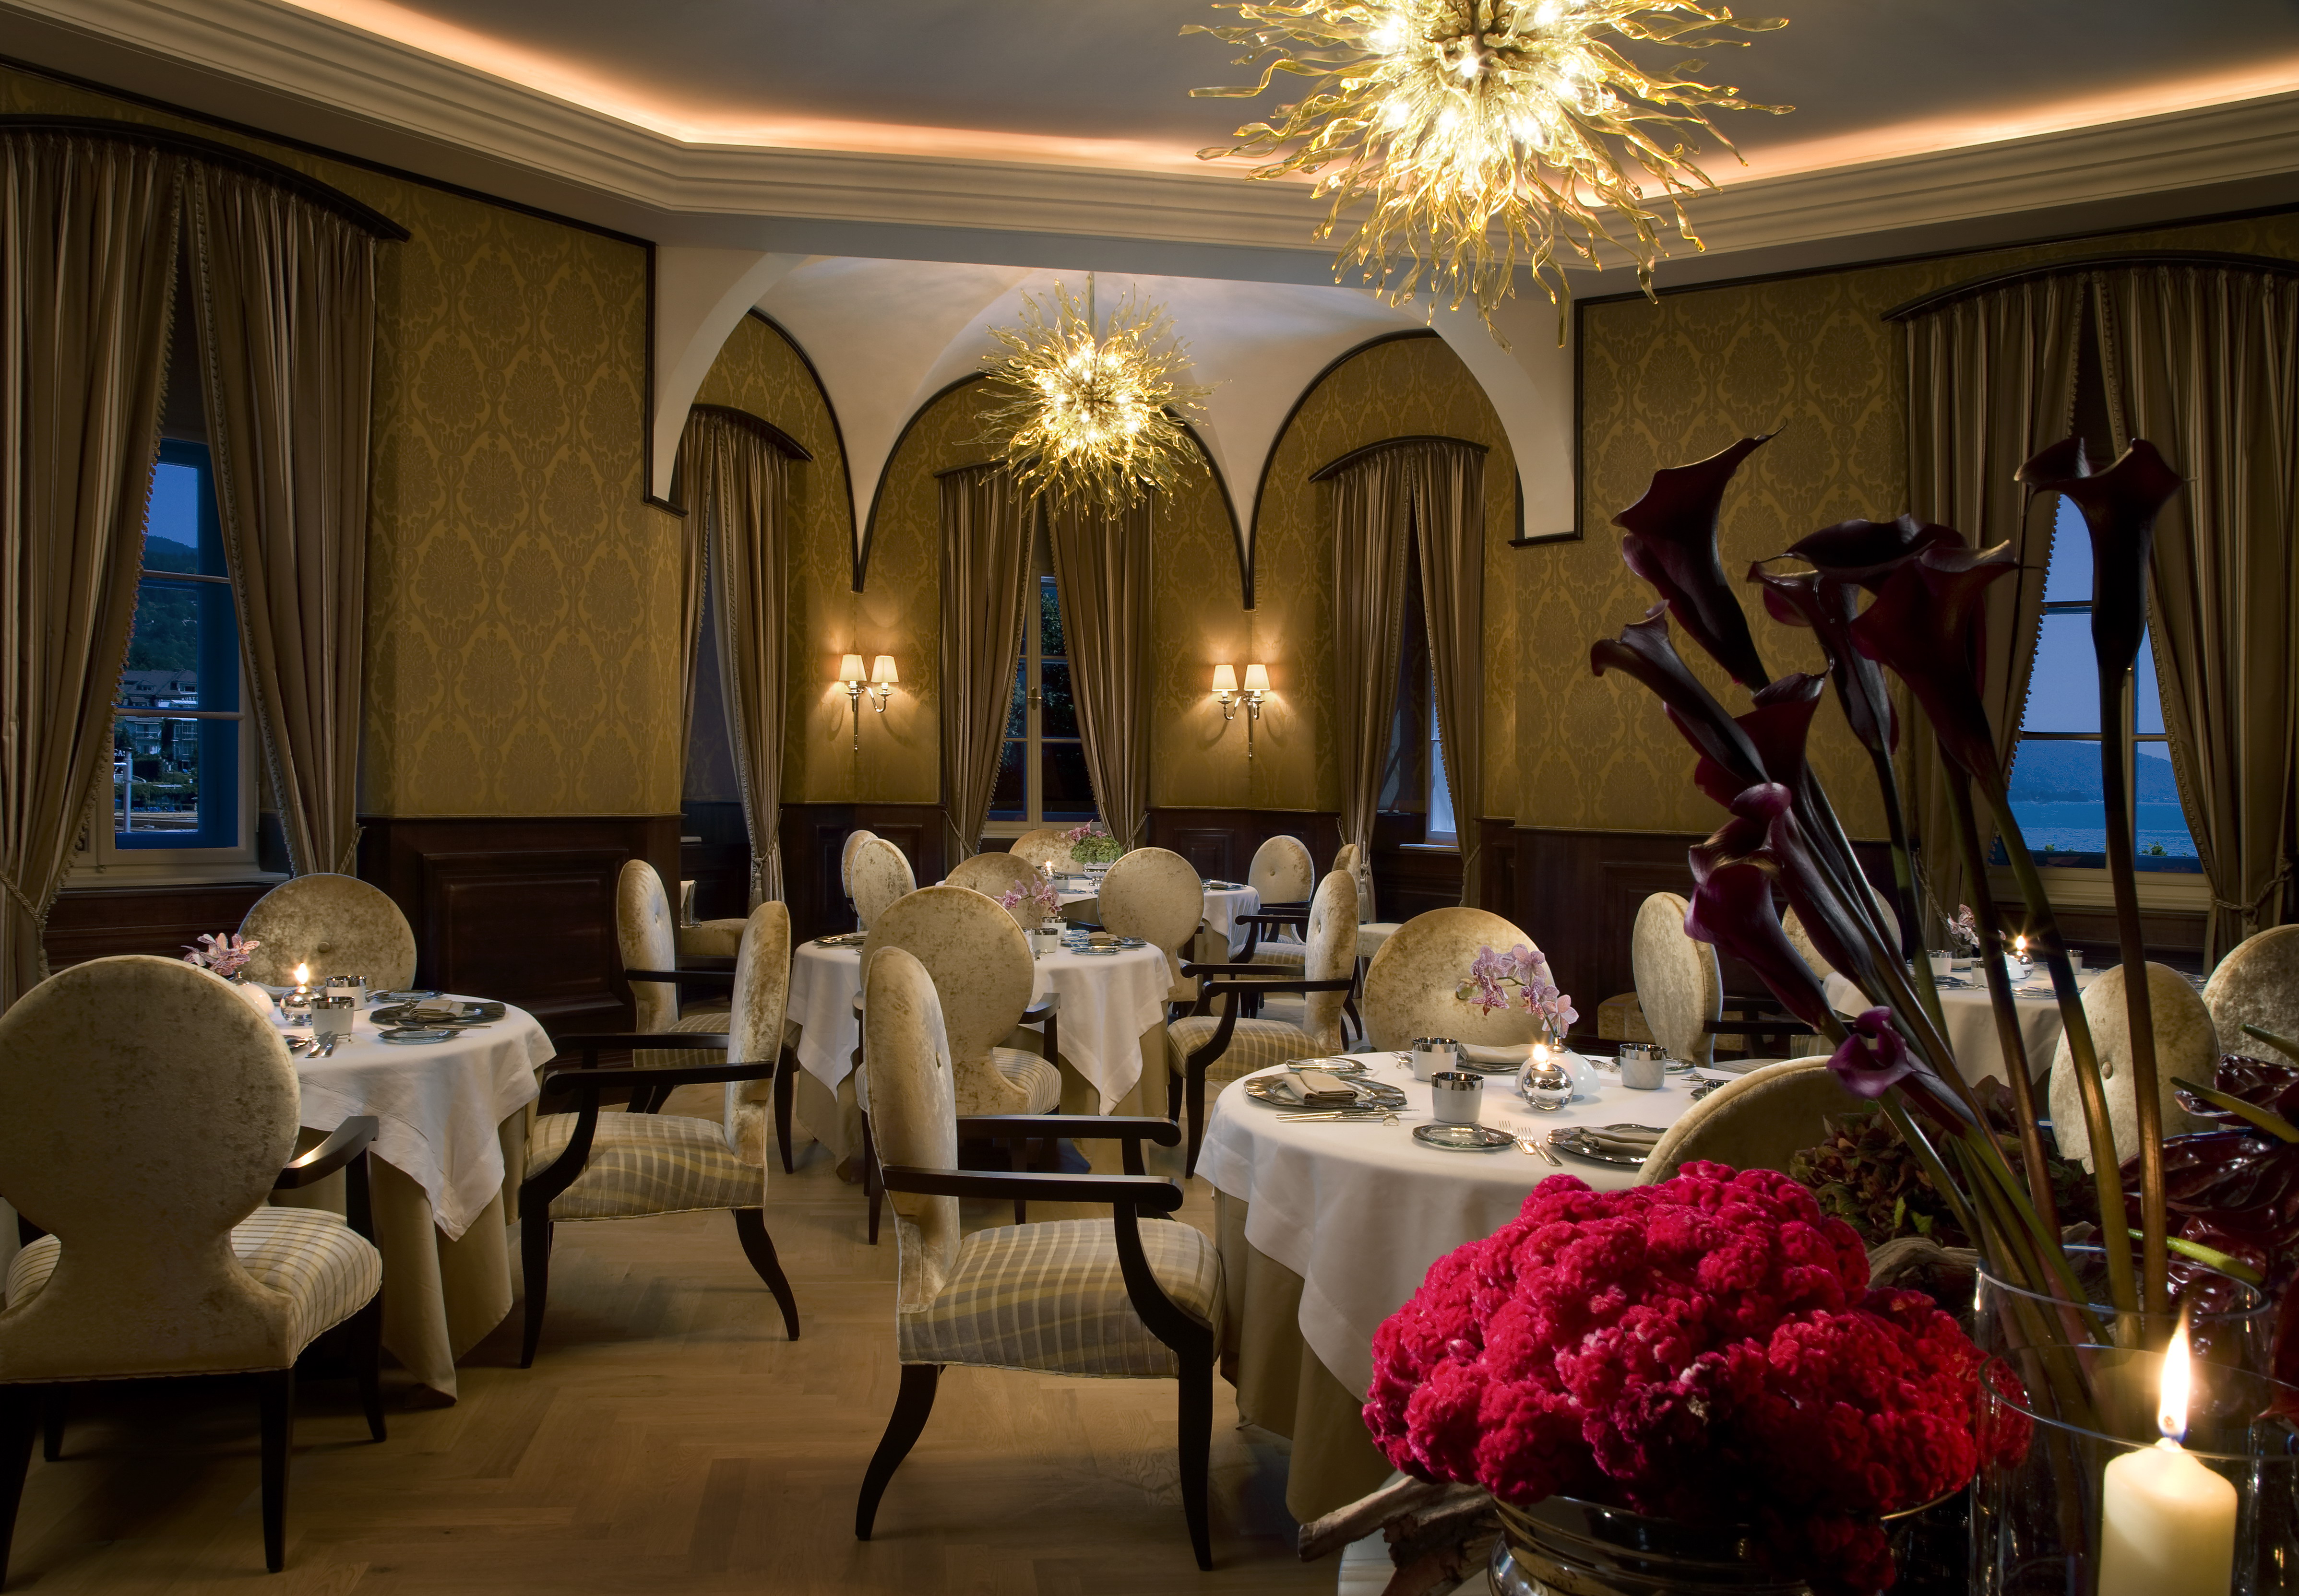 Restaurant im Schlosshotel Velden.
